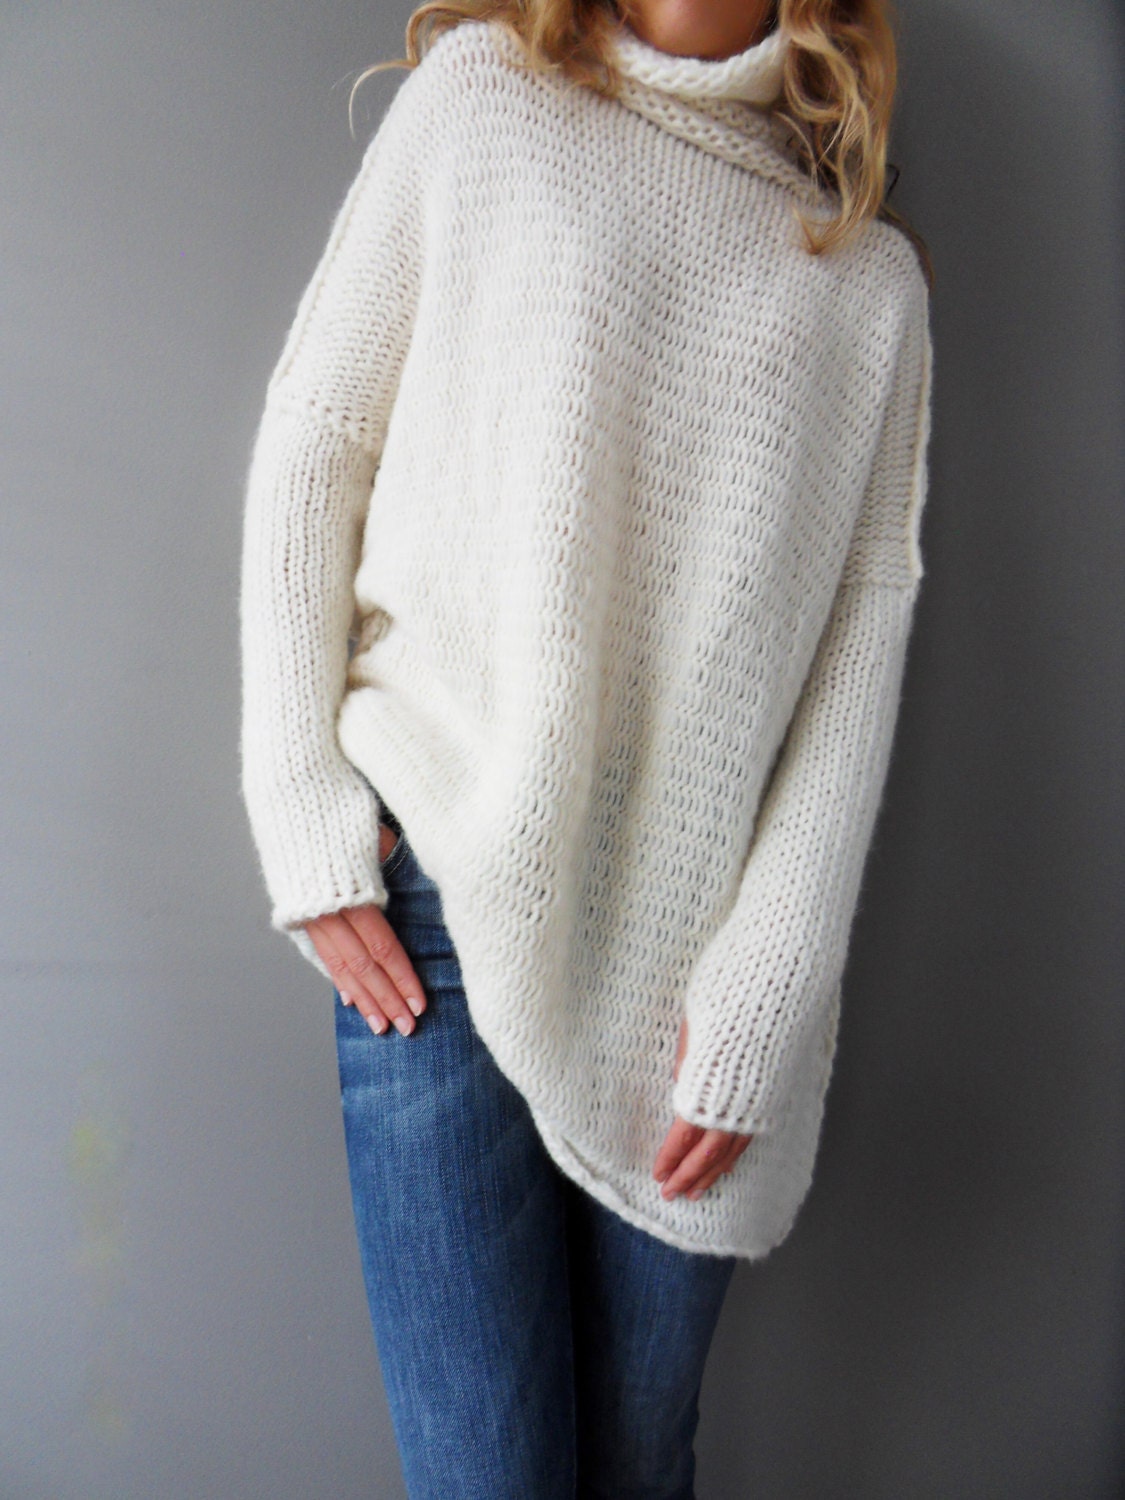 Oversized/Slouchy/Loose knit sweater. Chunky knit women